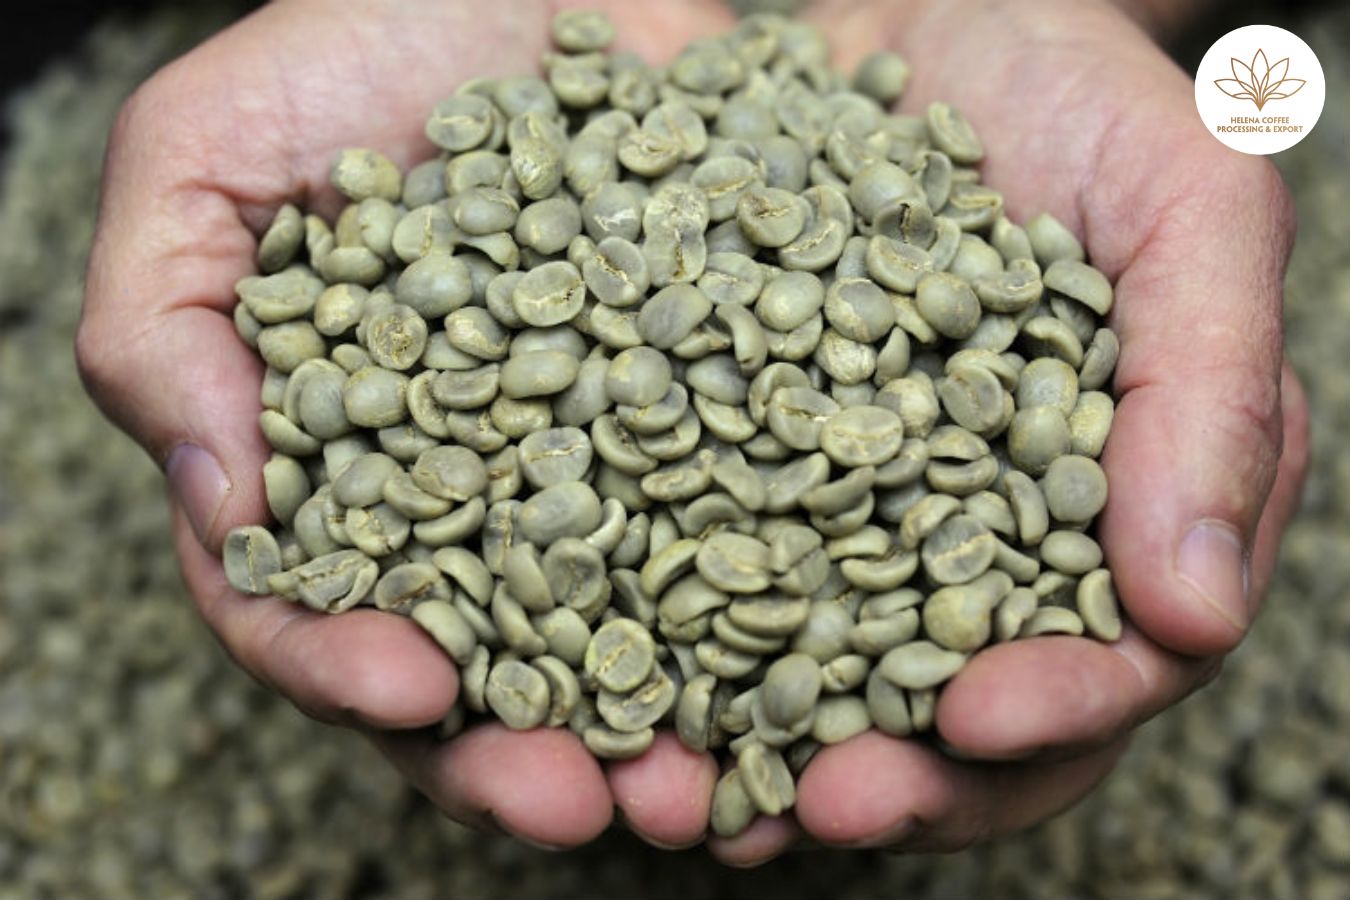 What Does Green Coffee Taste Like